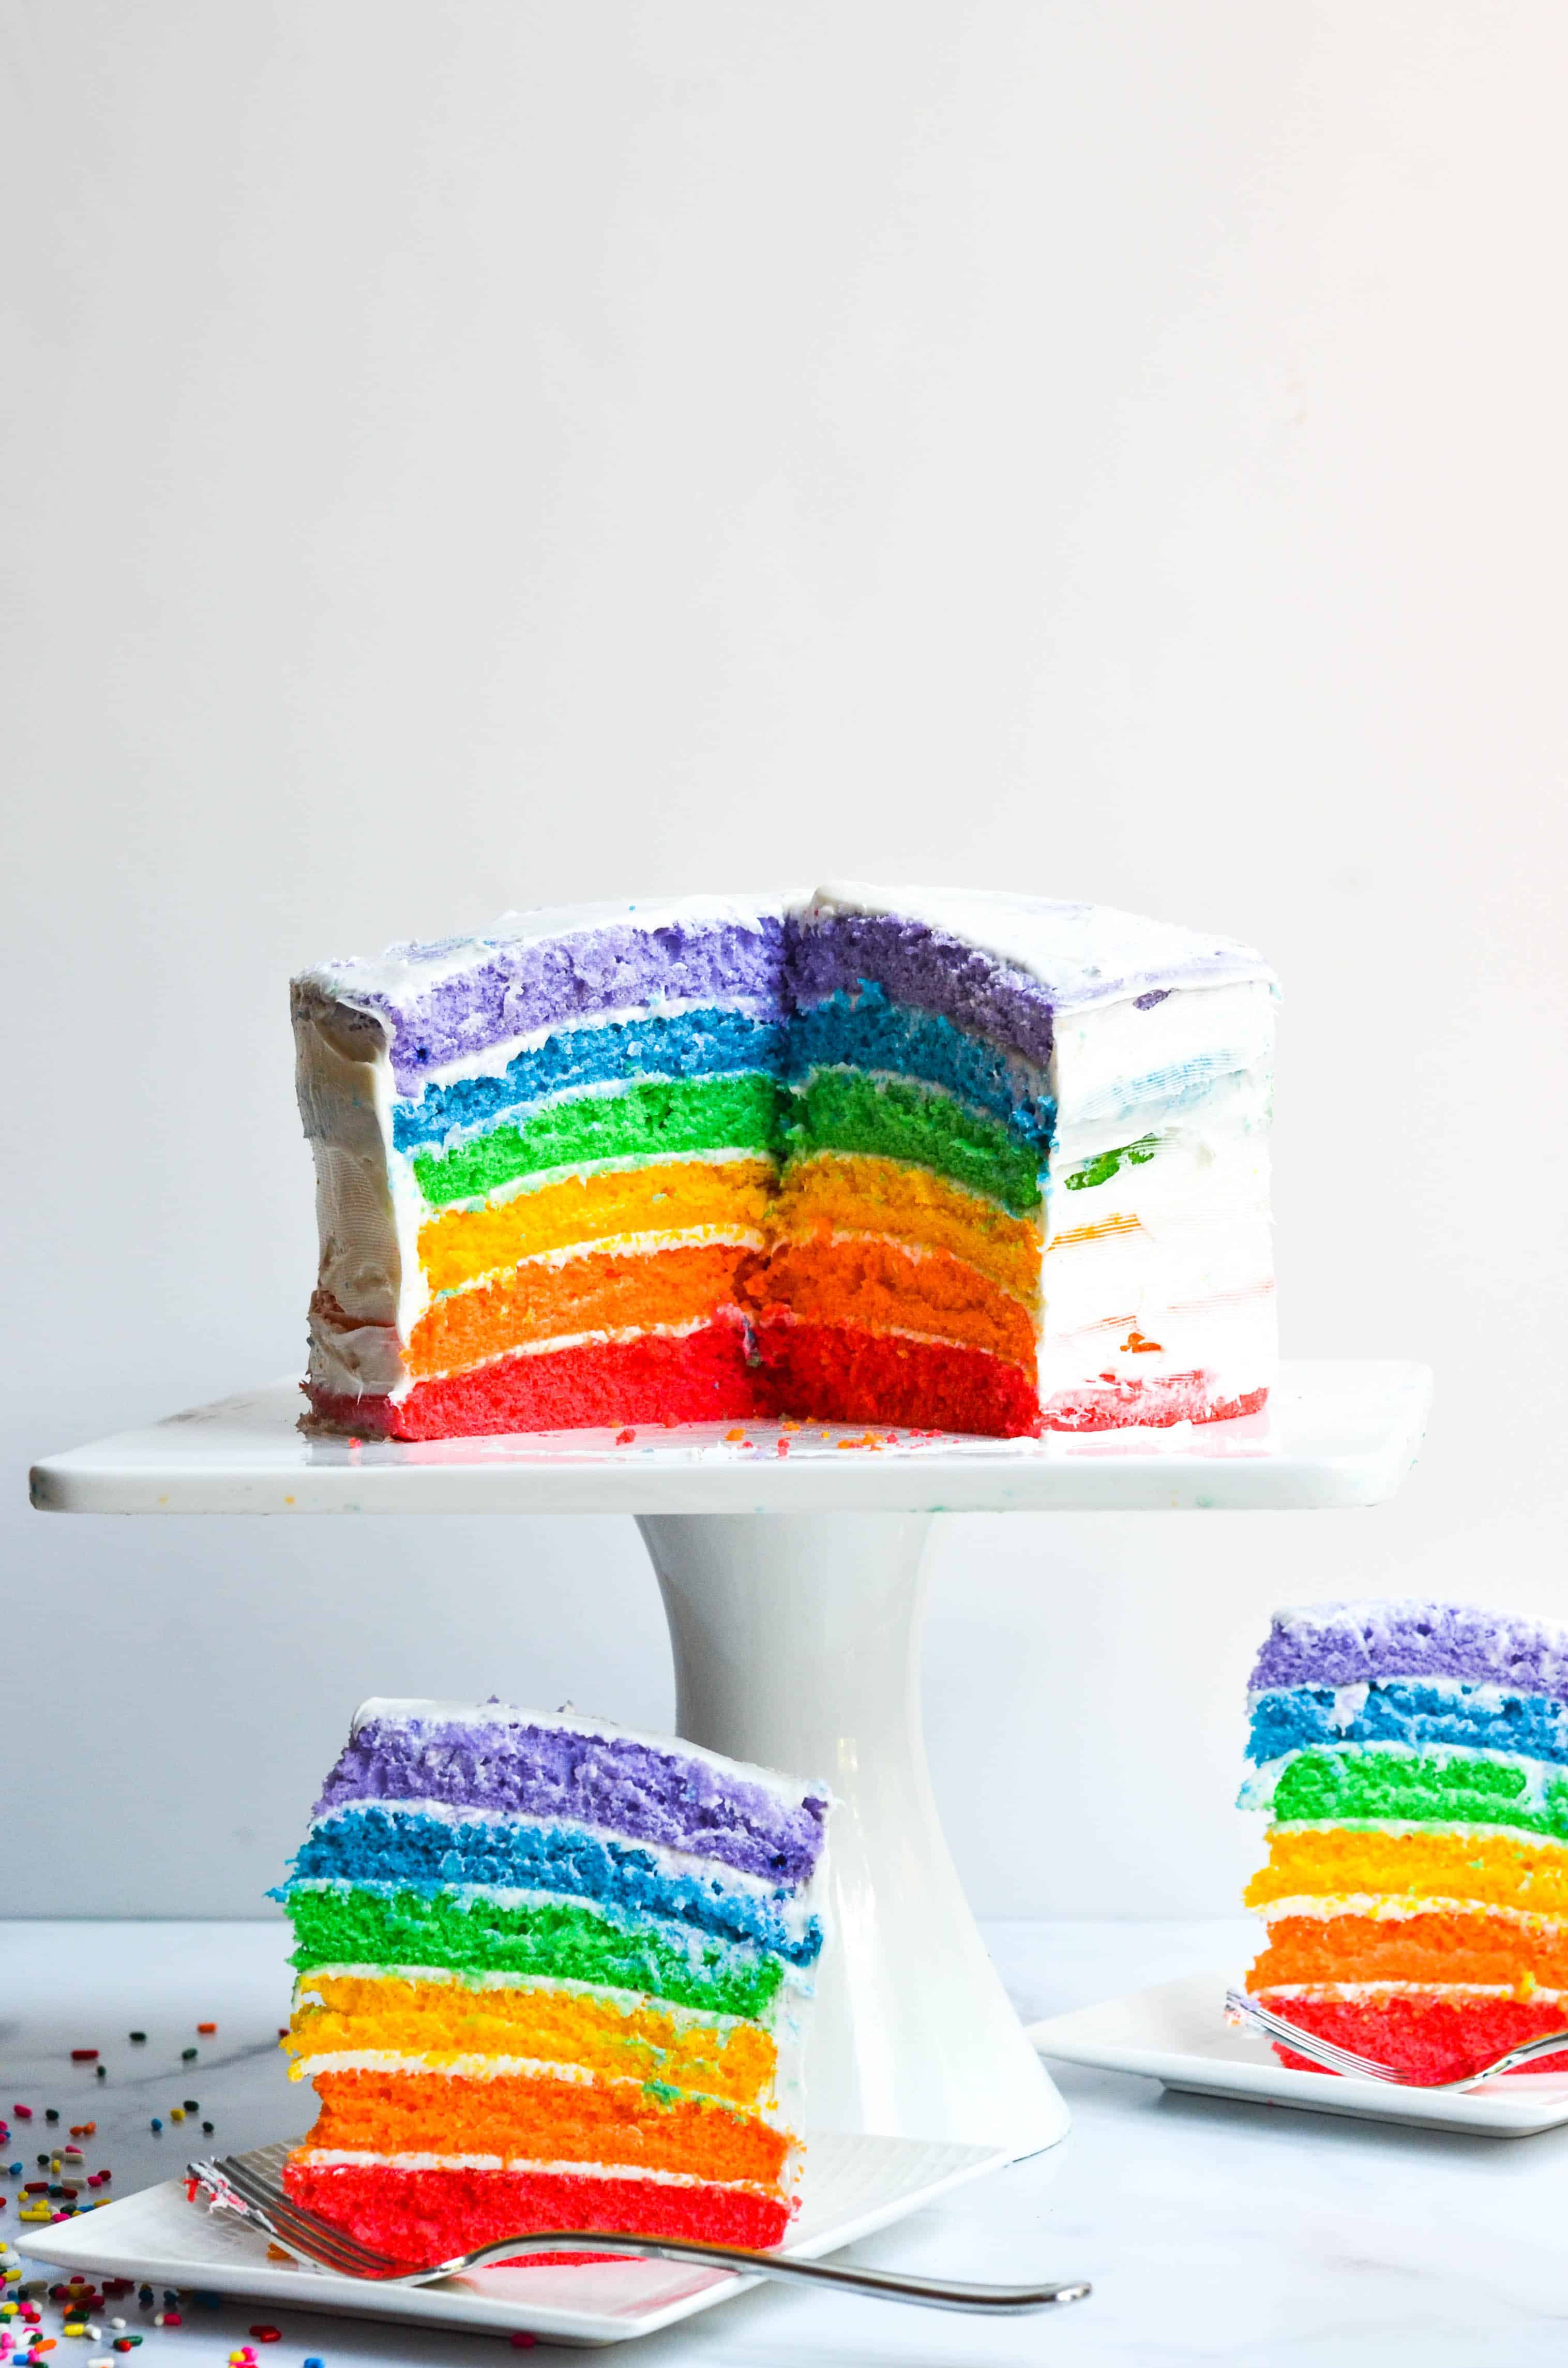 Bubblegum rainbow cake